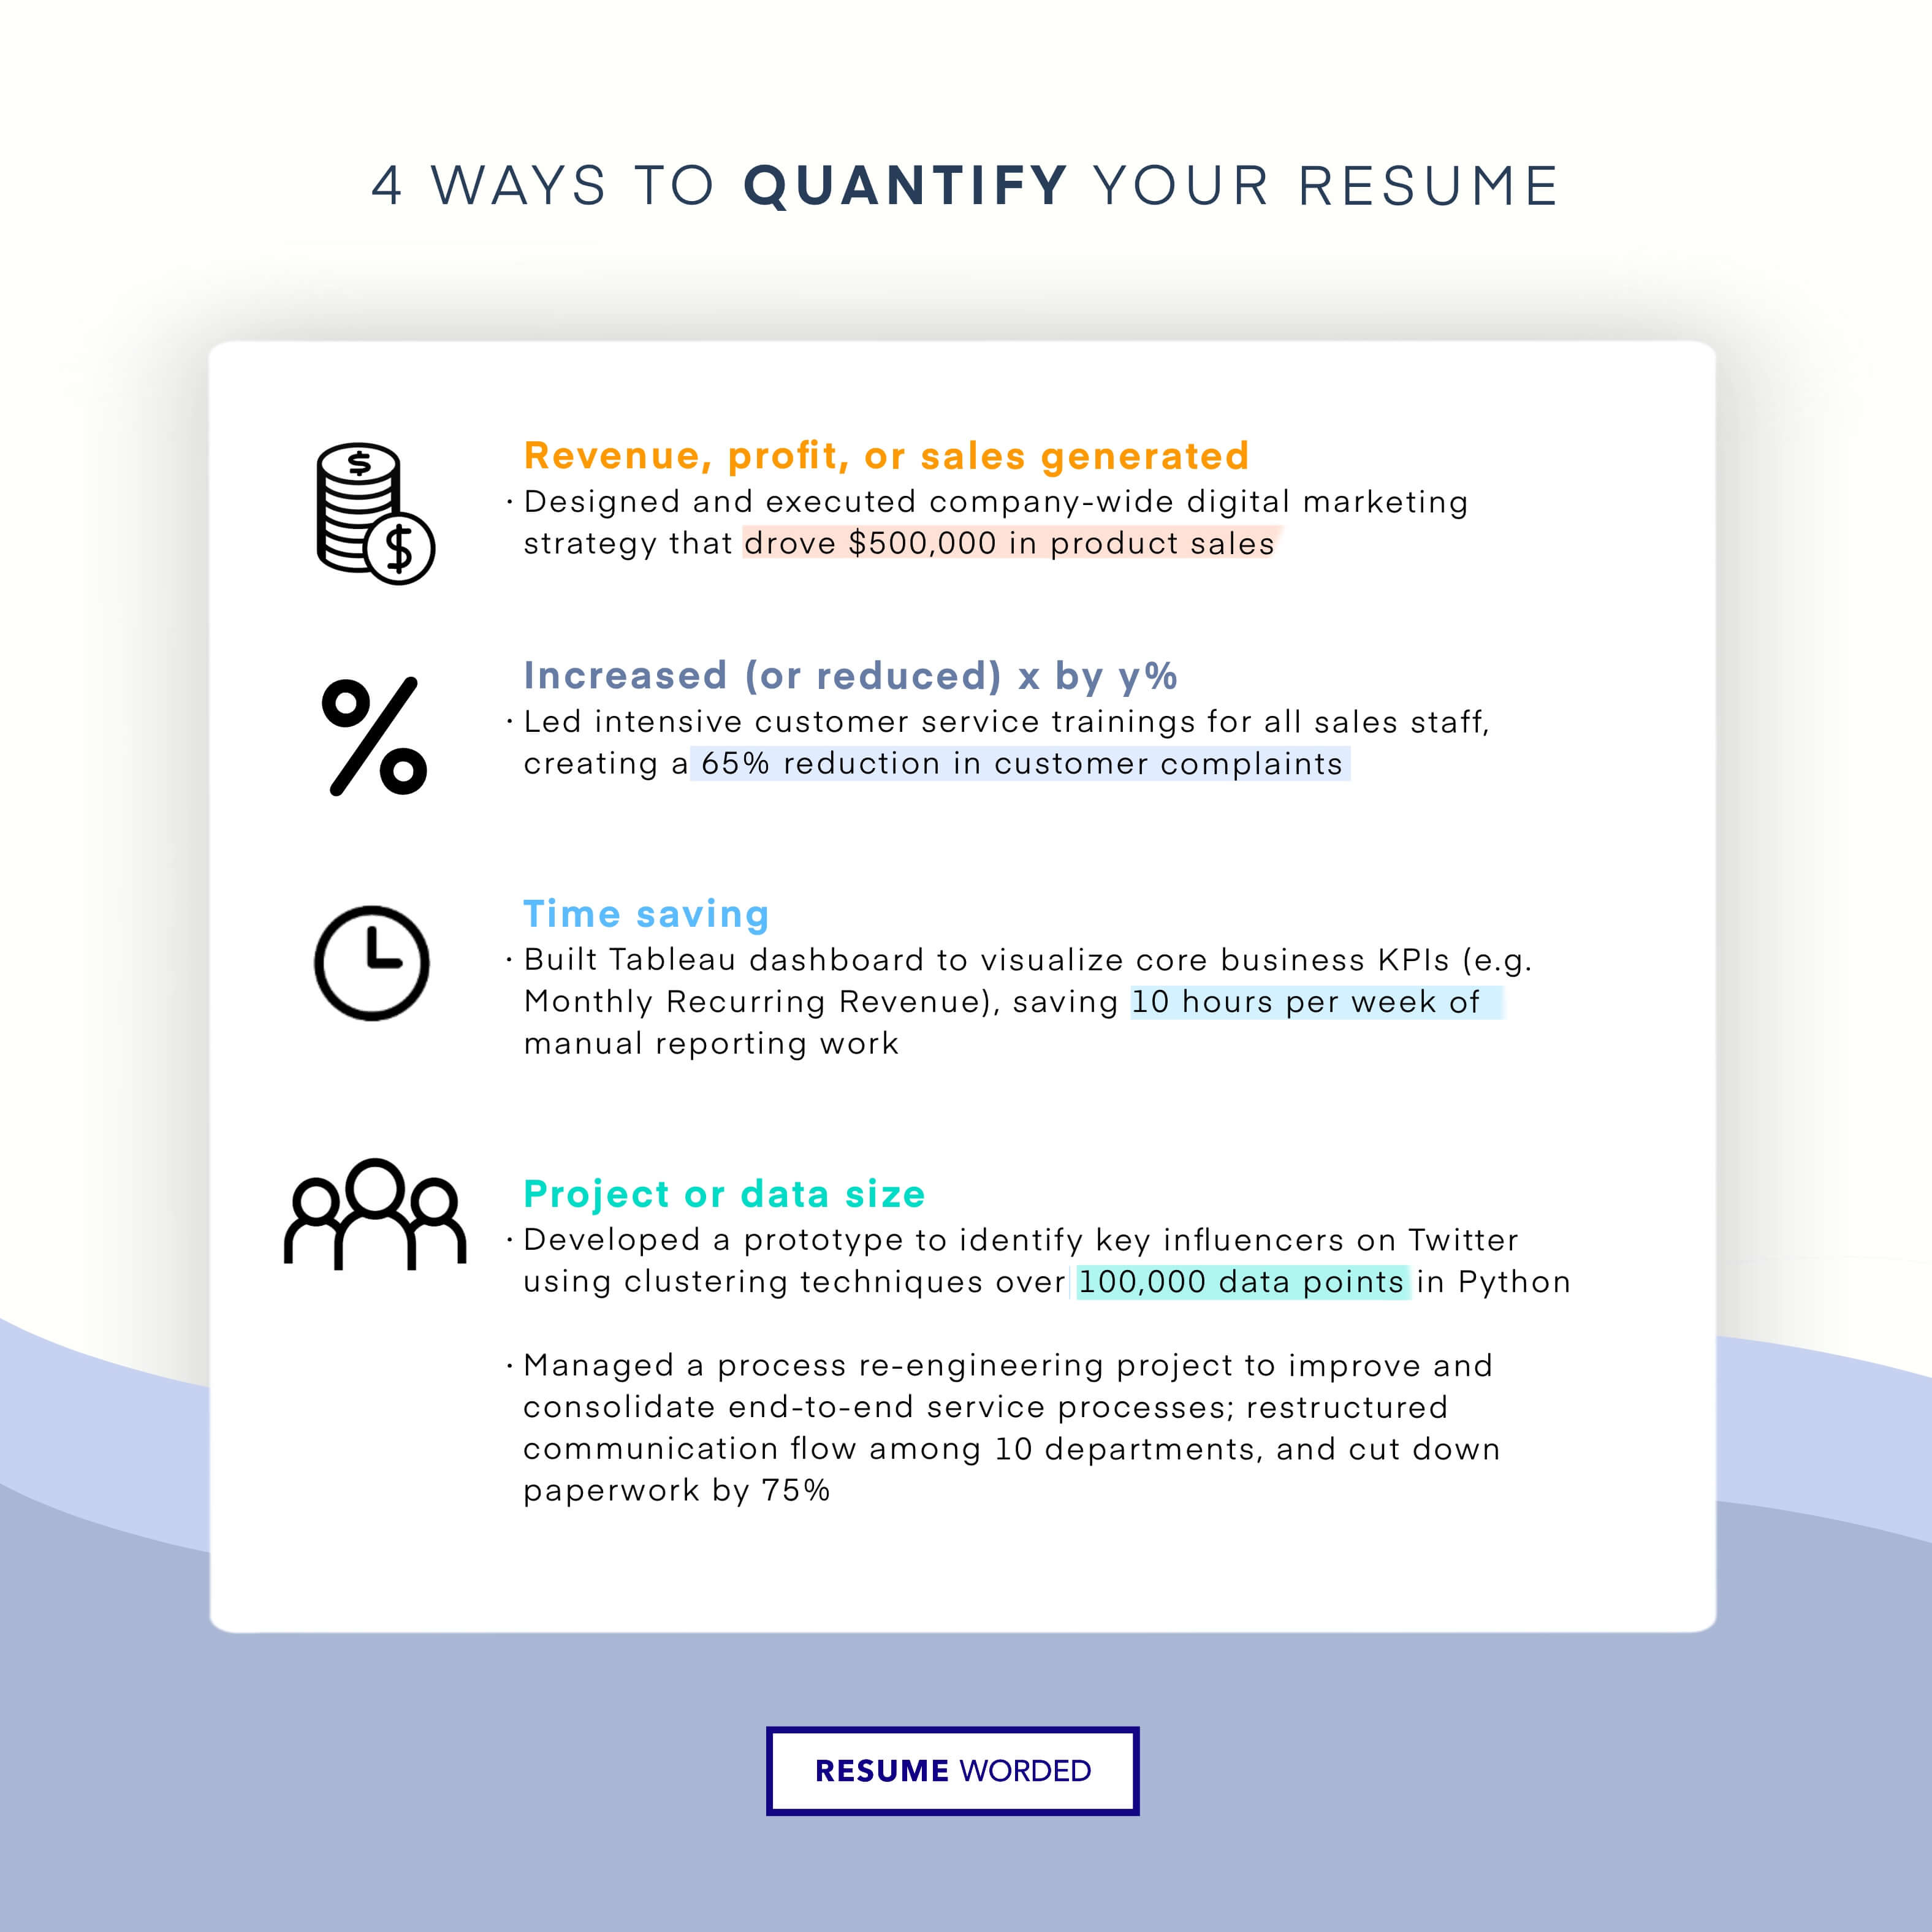 Quantify your QA testing success. - QA Automation Engineer Resume